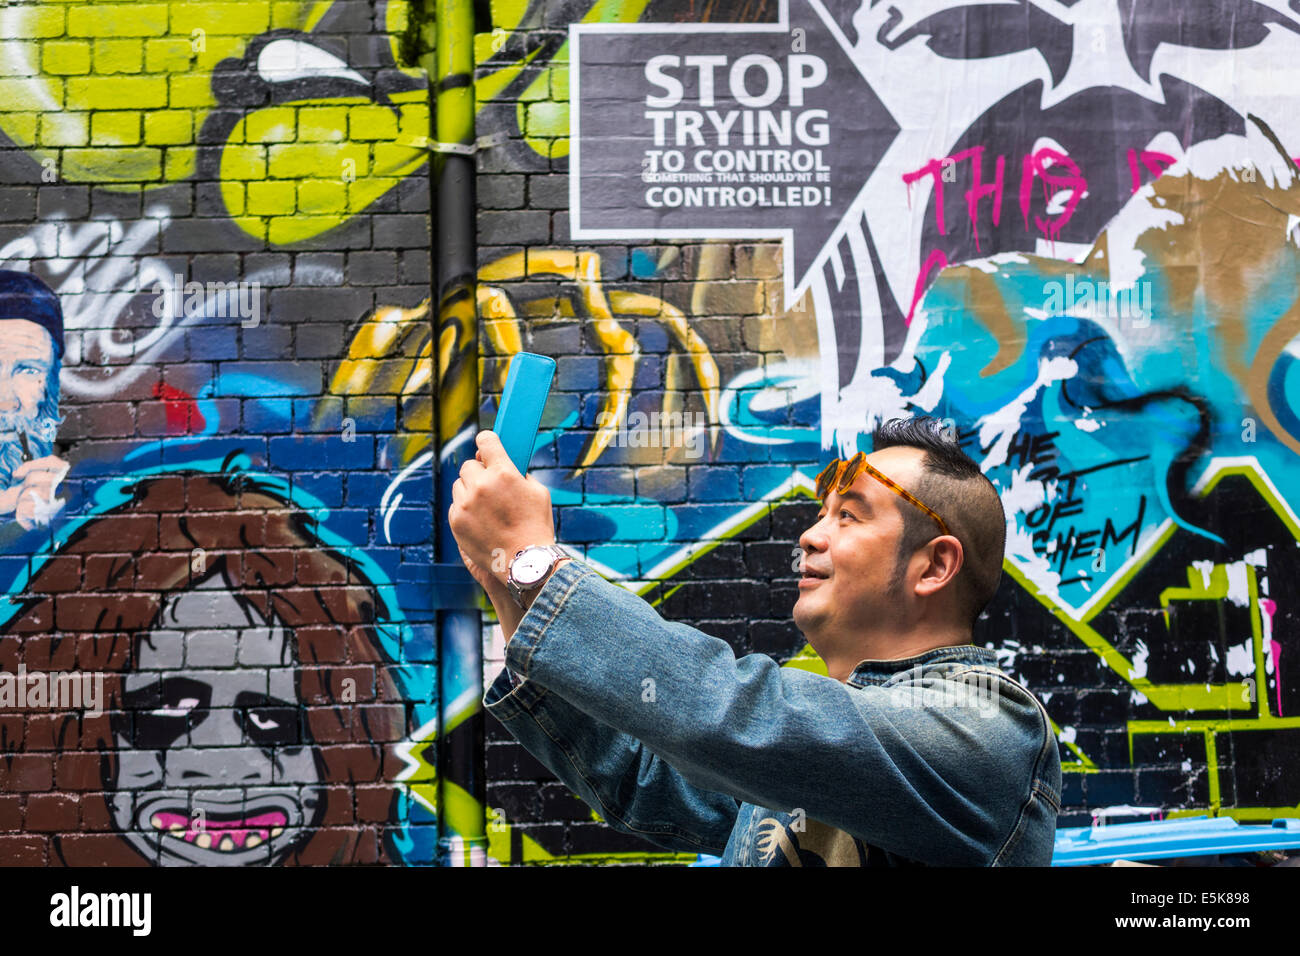 Melbourne Australien, Hosier Lane, urbane Street Art, Wandbilder, Graffiti, asiatischer Mann, Männer, Tablet, iPad, Taking, AU140322068 Stockfoto